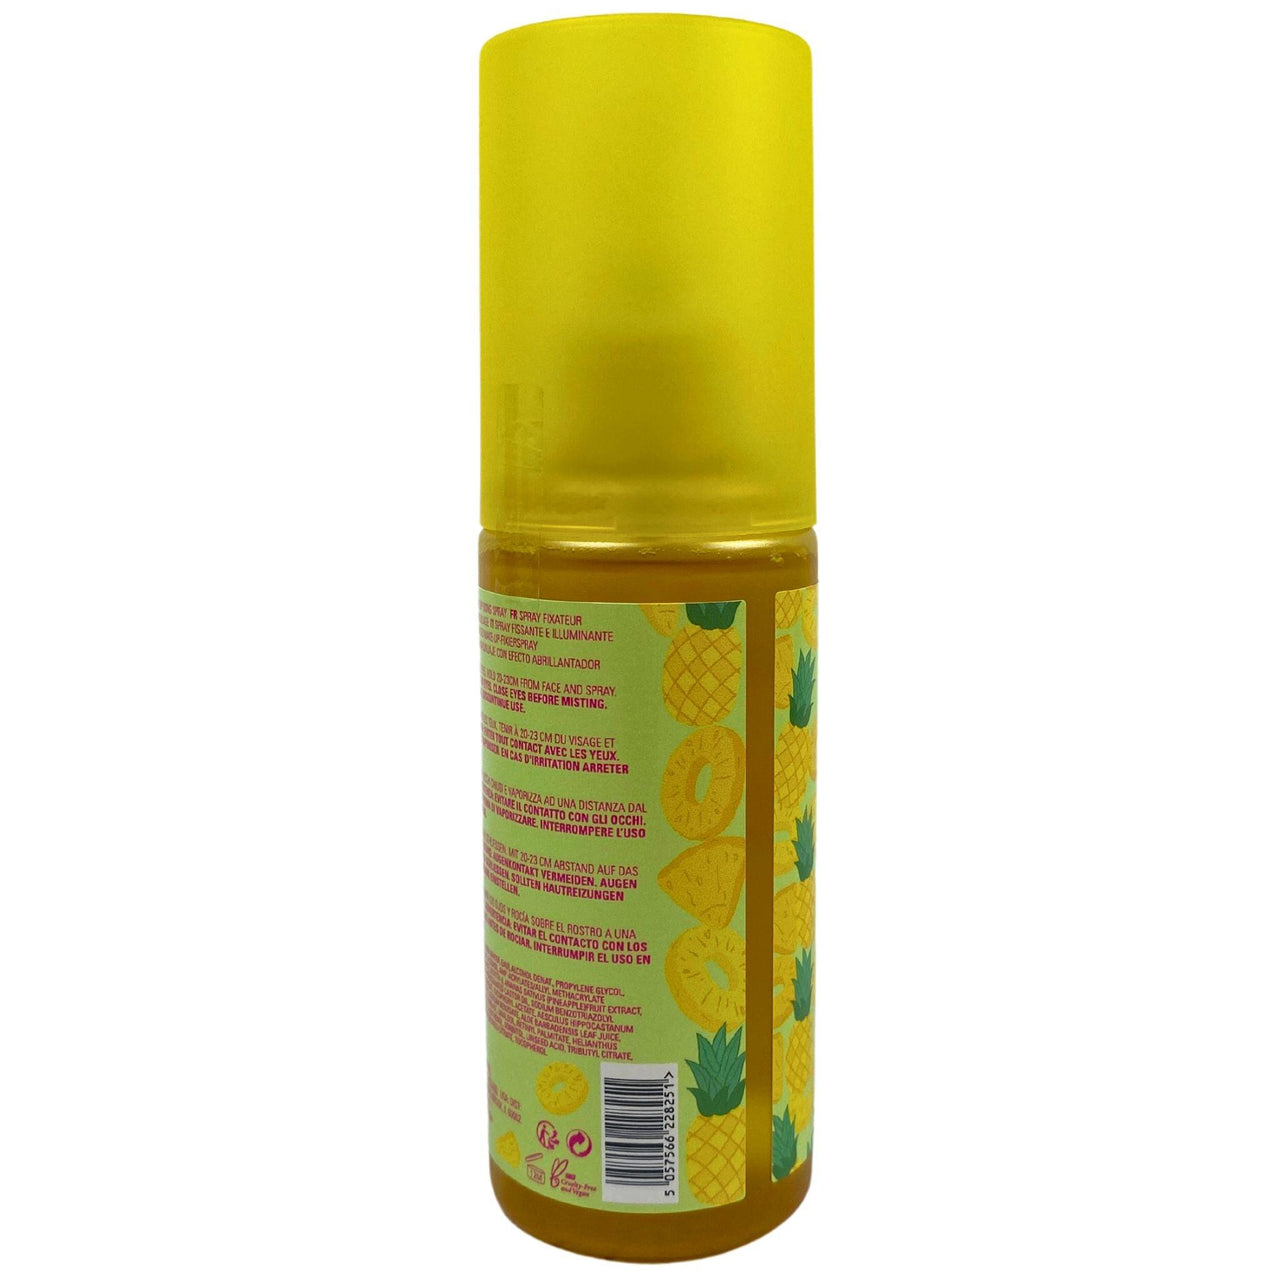 I Heart Revolution Pineapple Brightening Makeup Fixing Spray 3.38OZ (36 Pcs Lot) - Discount Wholesalers Inc